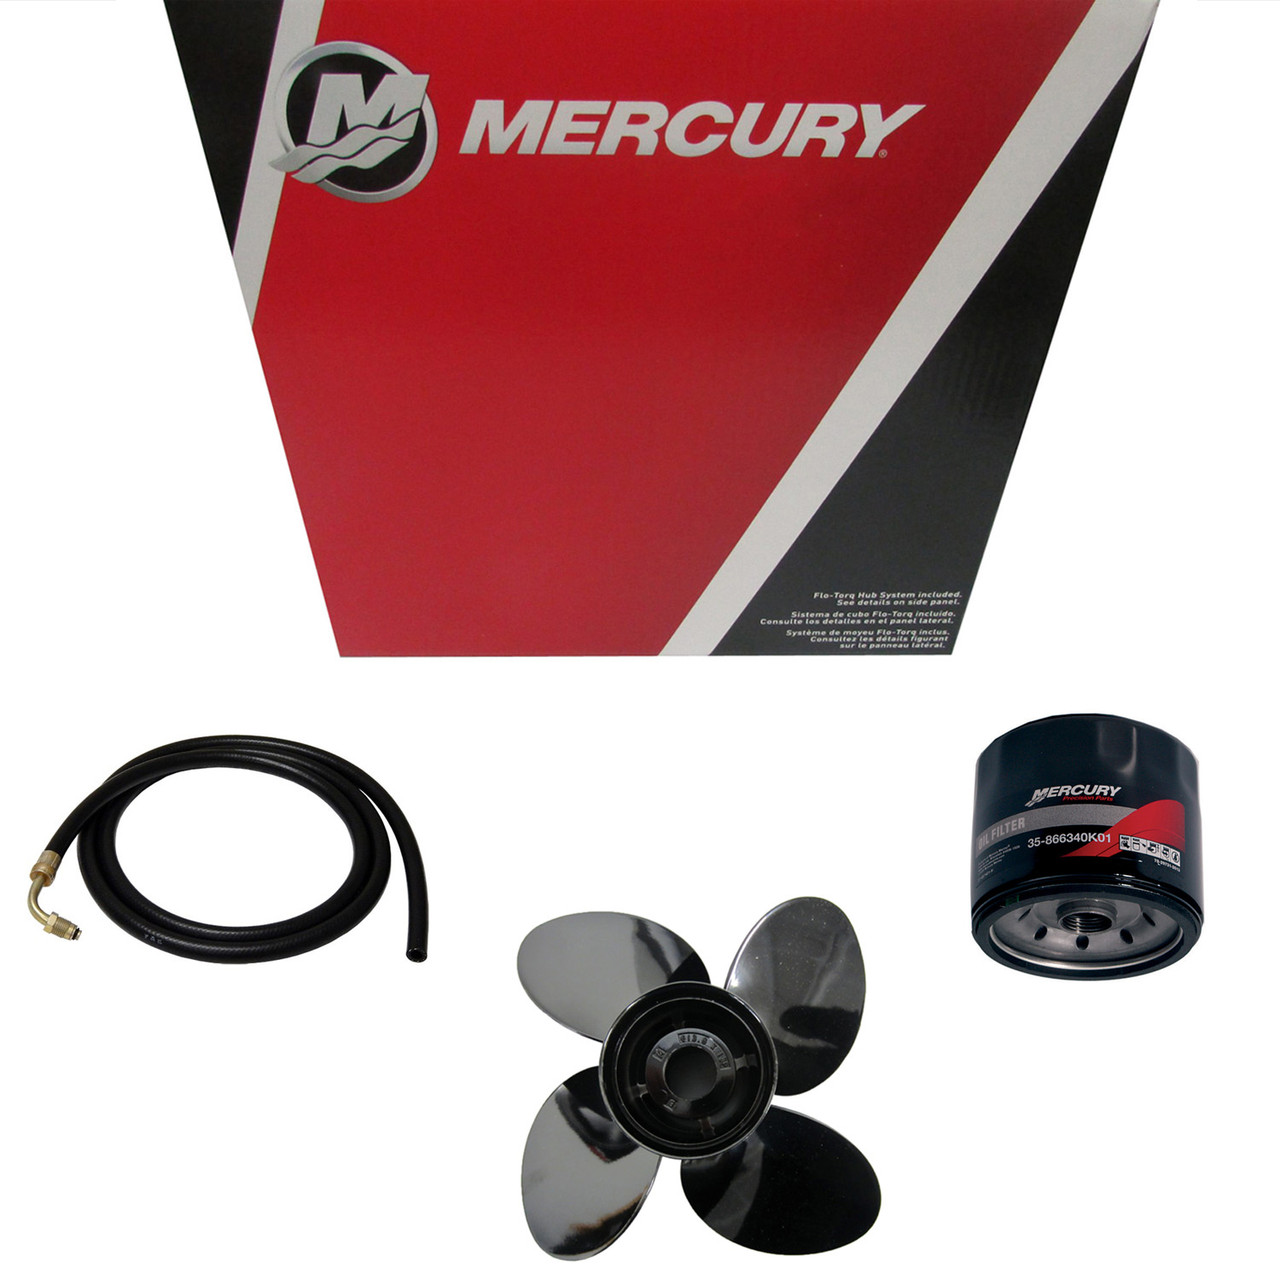 Mercury Marine/Mercruiser New OEM Oil Seal, 26-893549